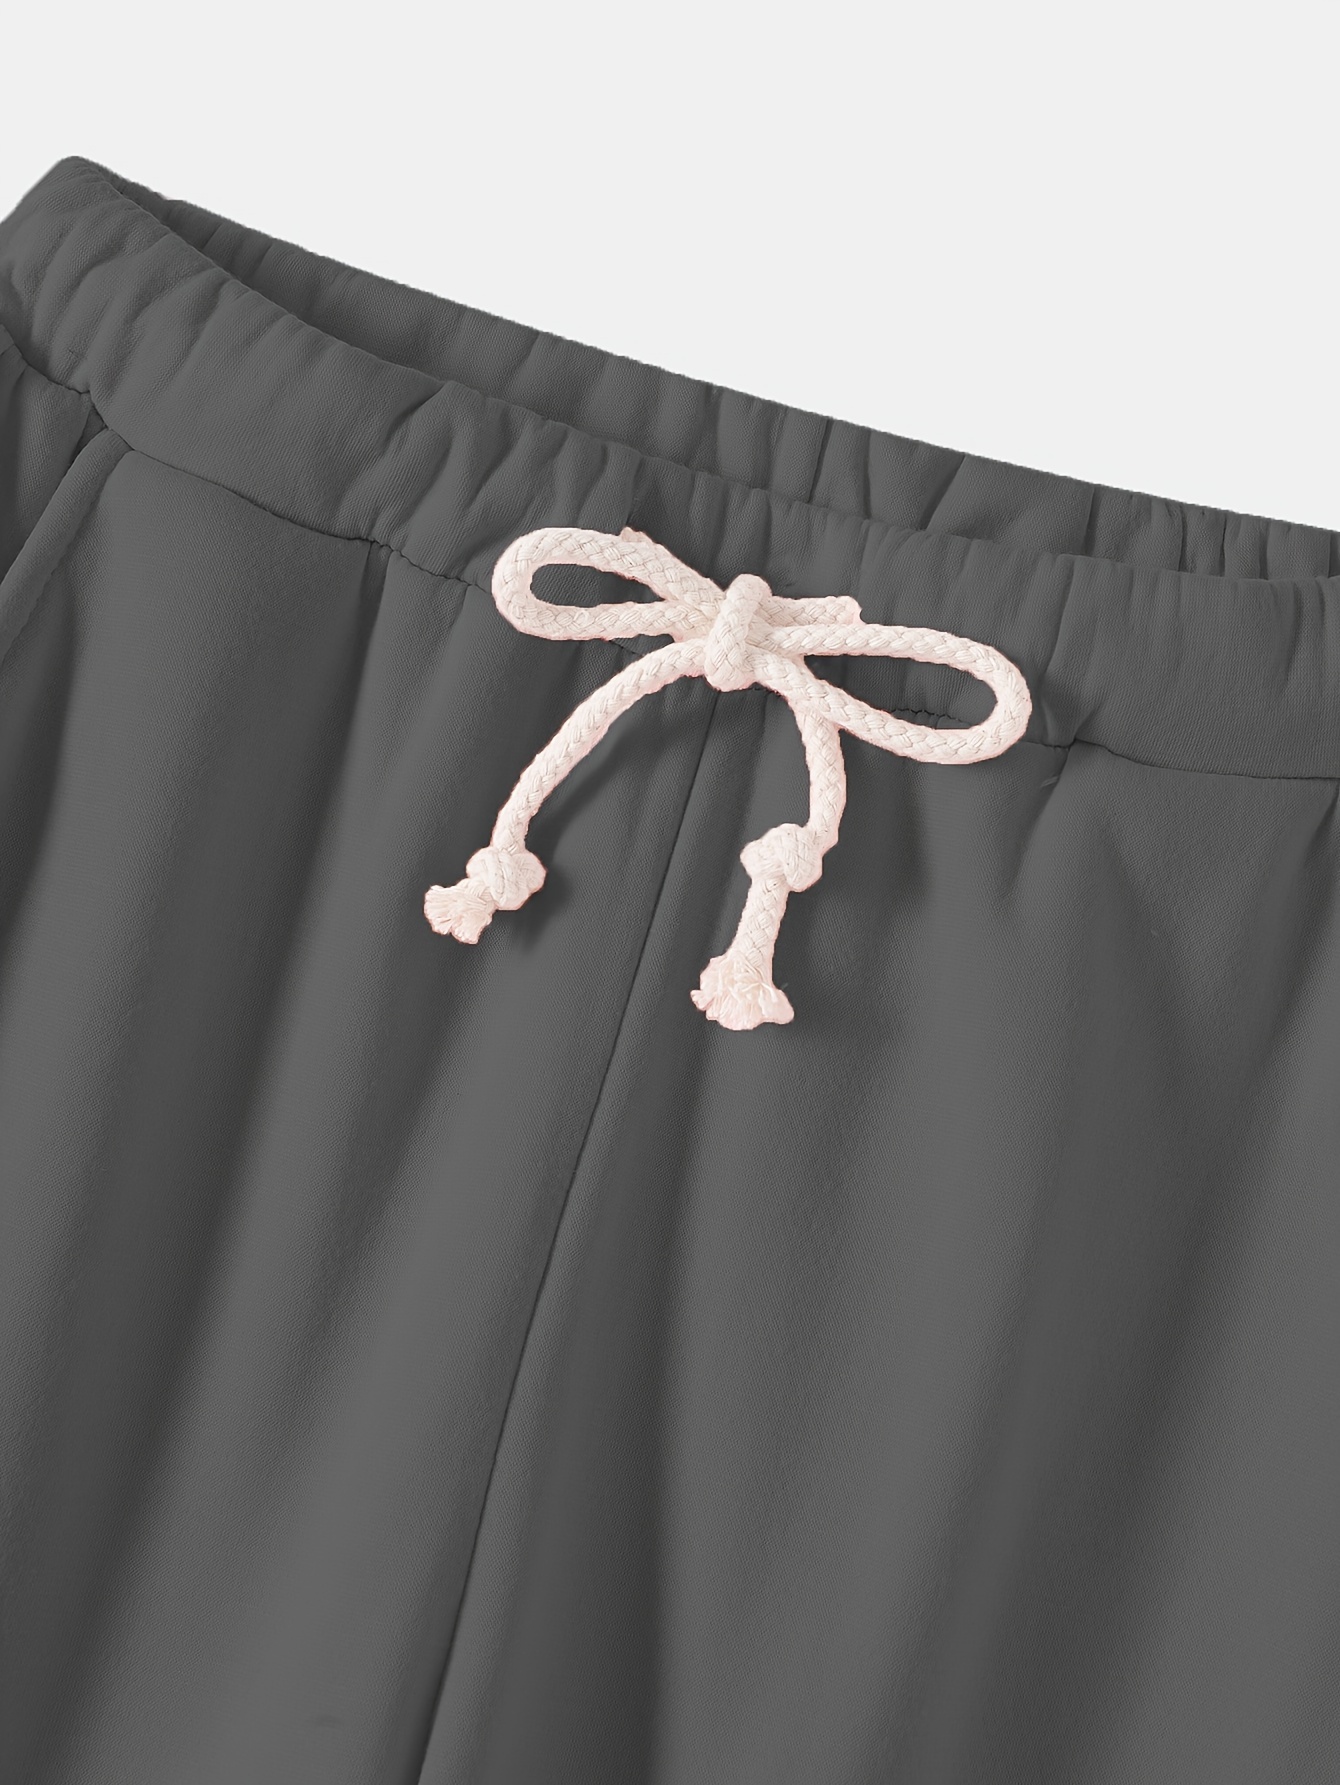 solid drawstring thermal sweatpants versatile loose comfy jogger pants womens clothing details 21